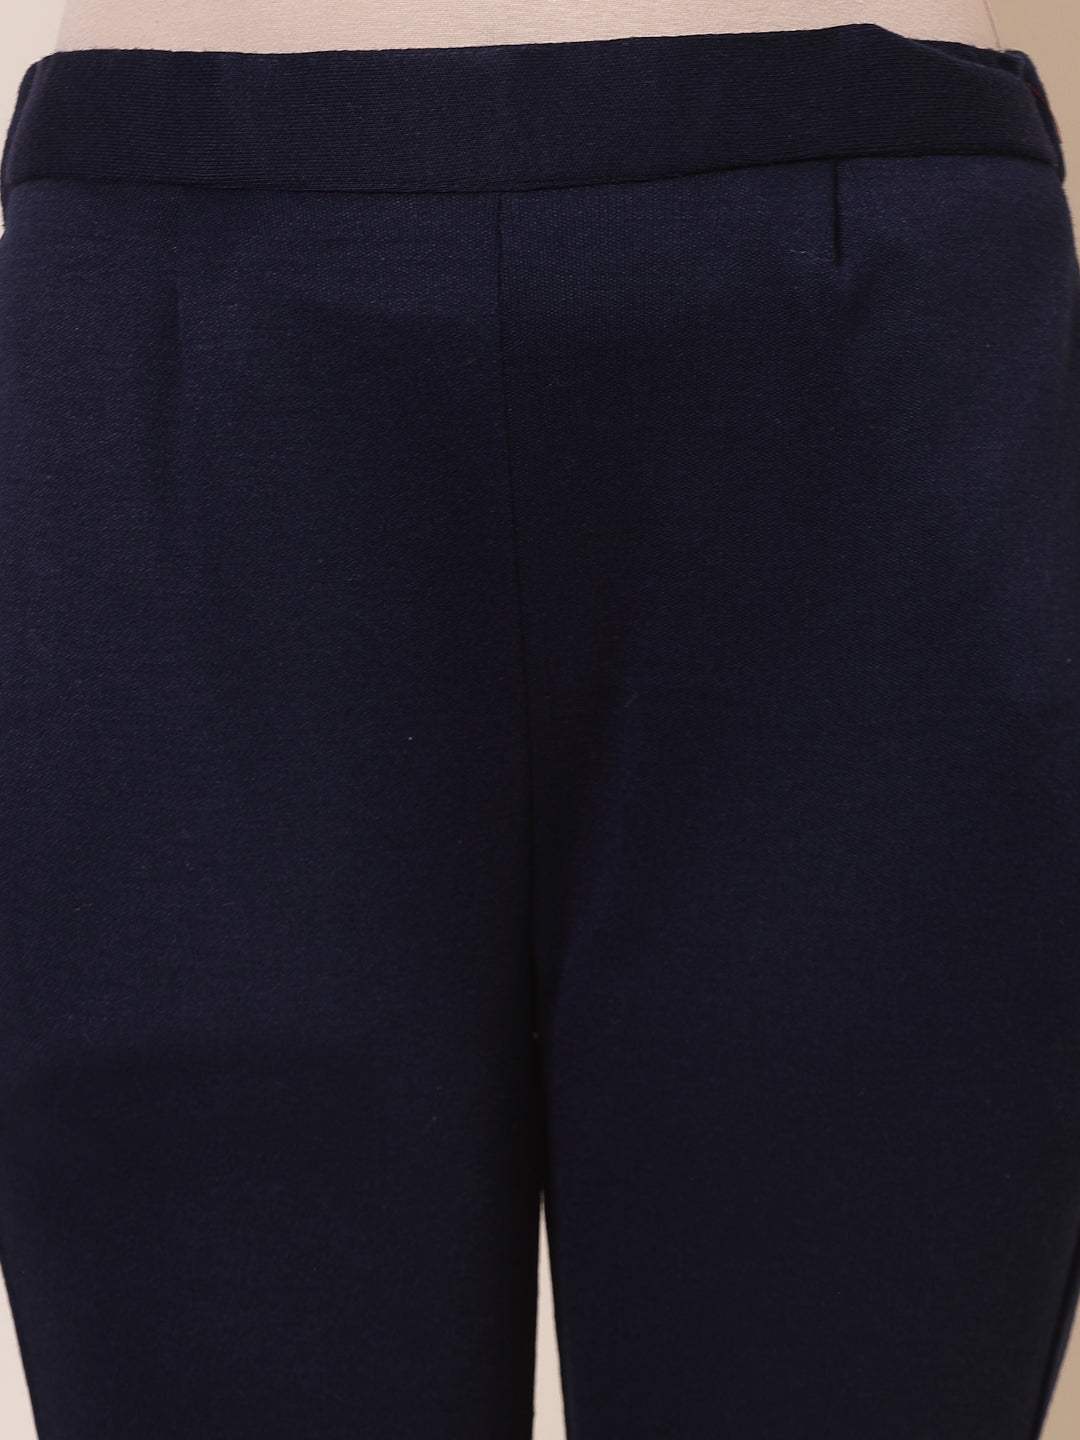 Light Fawn & Navy Blue Solid Woollen Trouser (Pack of 2)